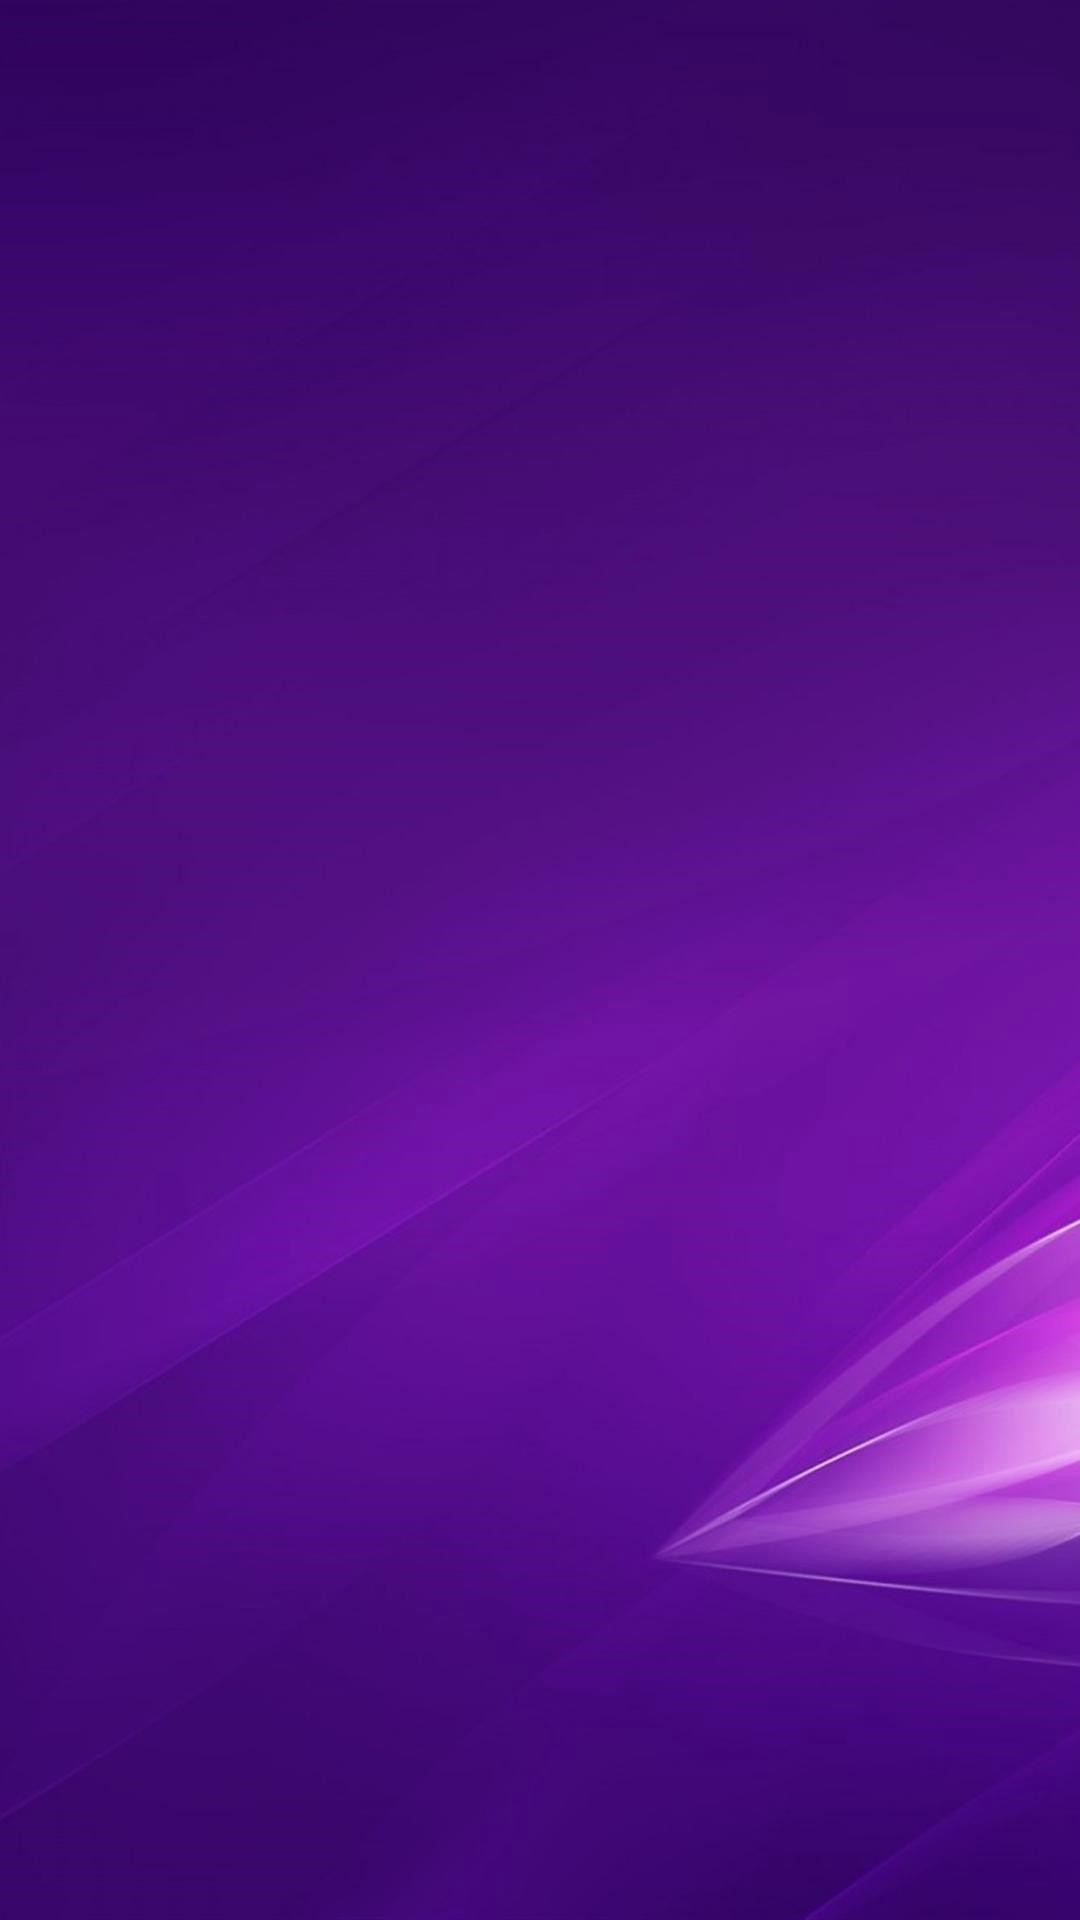 1080x1920 ... ilikewallpaper_com Purple Wallpaper For Iphone purple wallpaper for  iphone HD5 ...